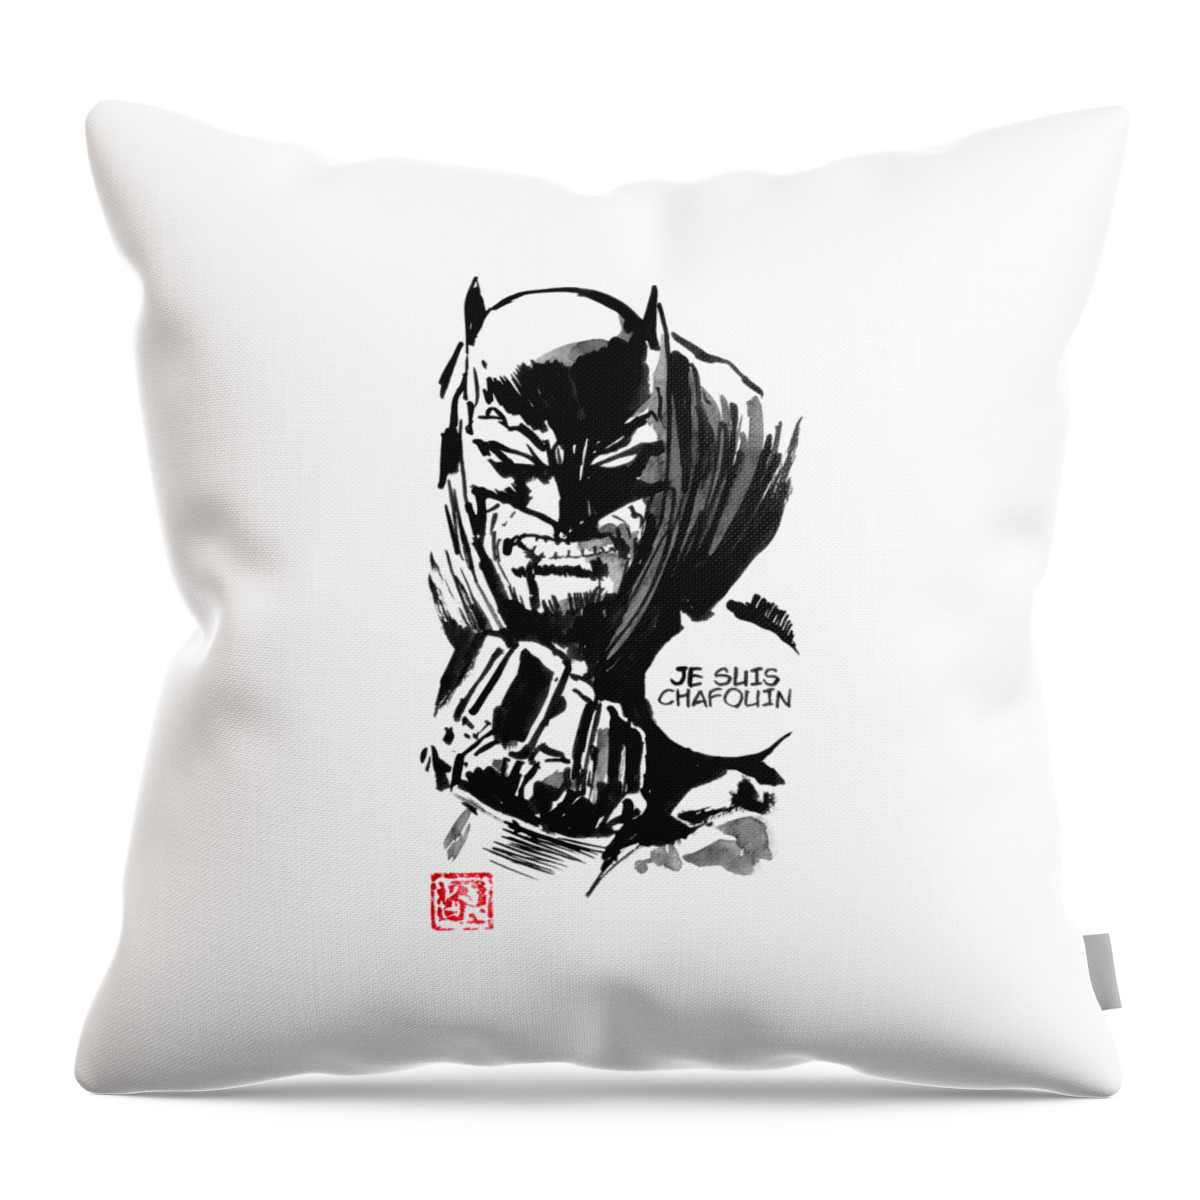 Batman Throw Pillow featuring the drawing Batman Chafouin by Pechane Sumie